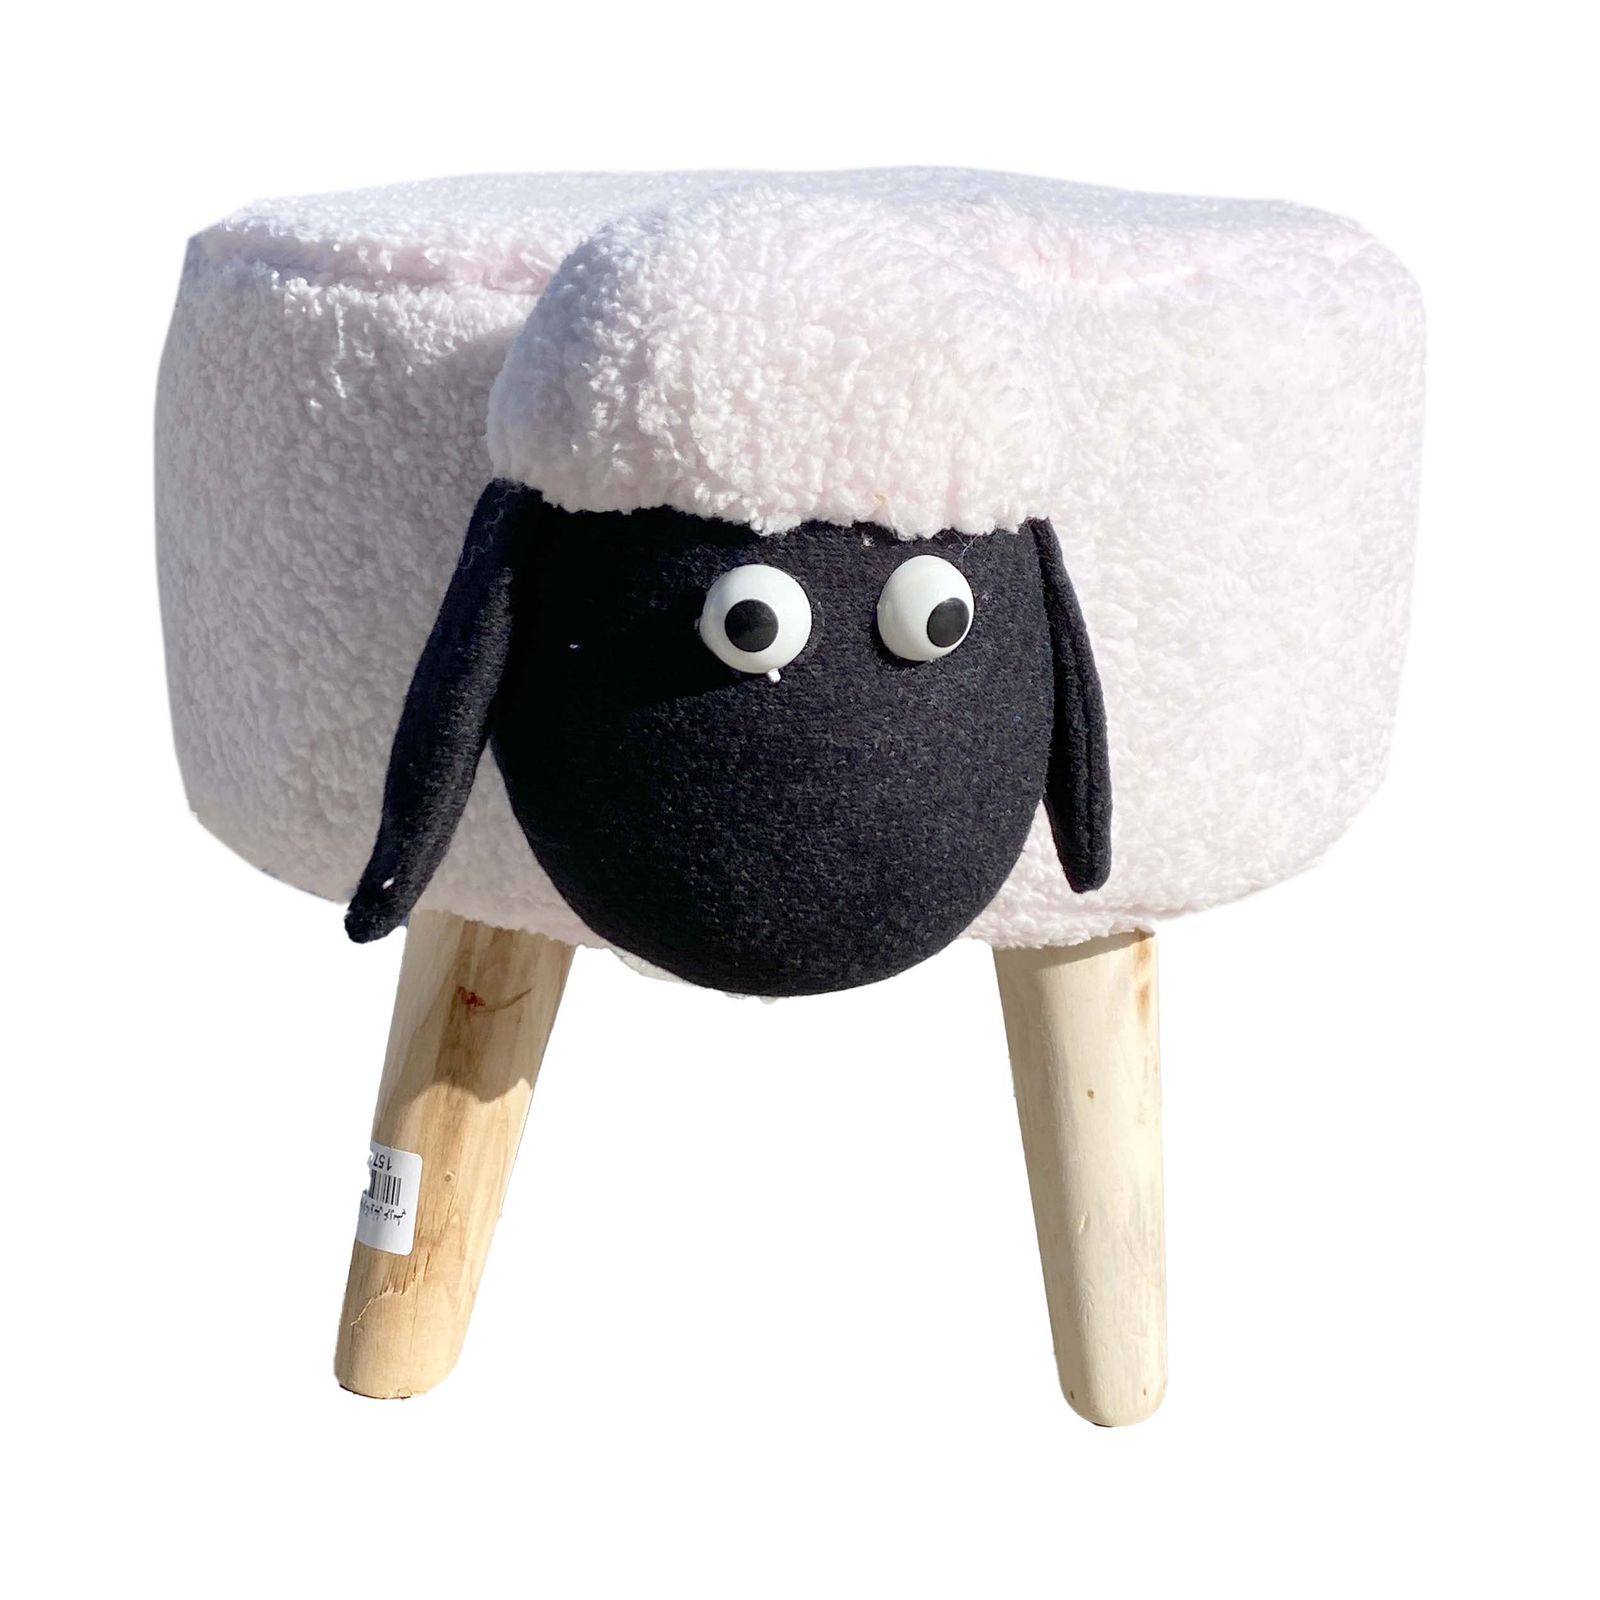 پاف کودک مدل گوسفند -  - 1